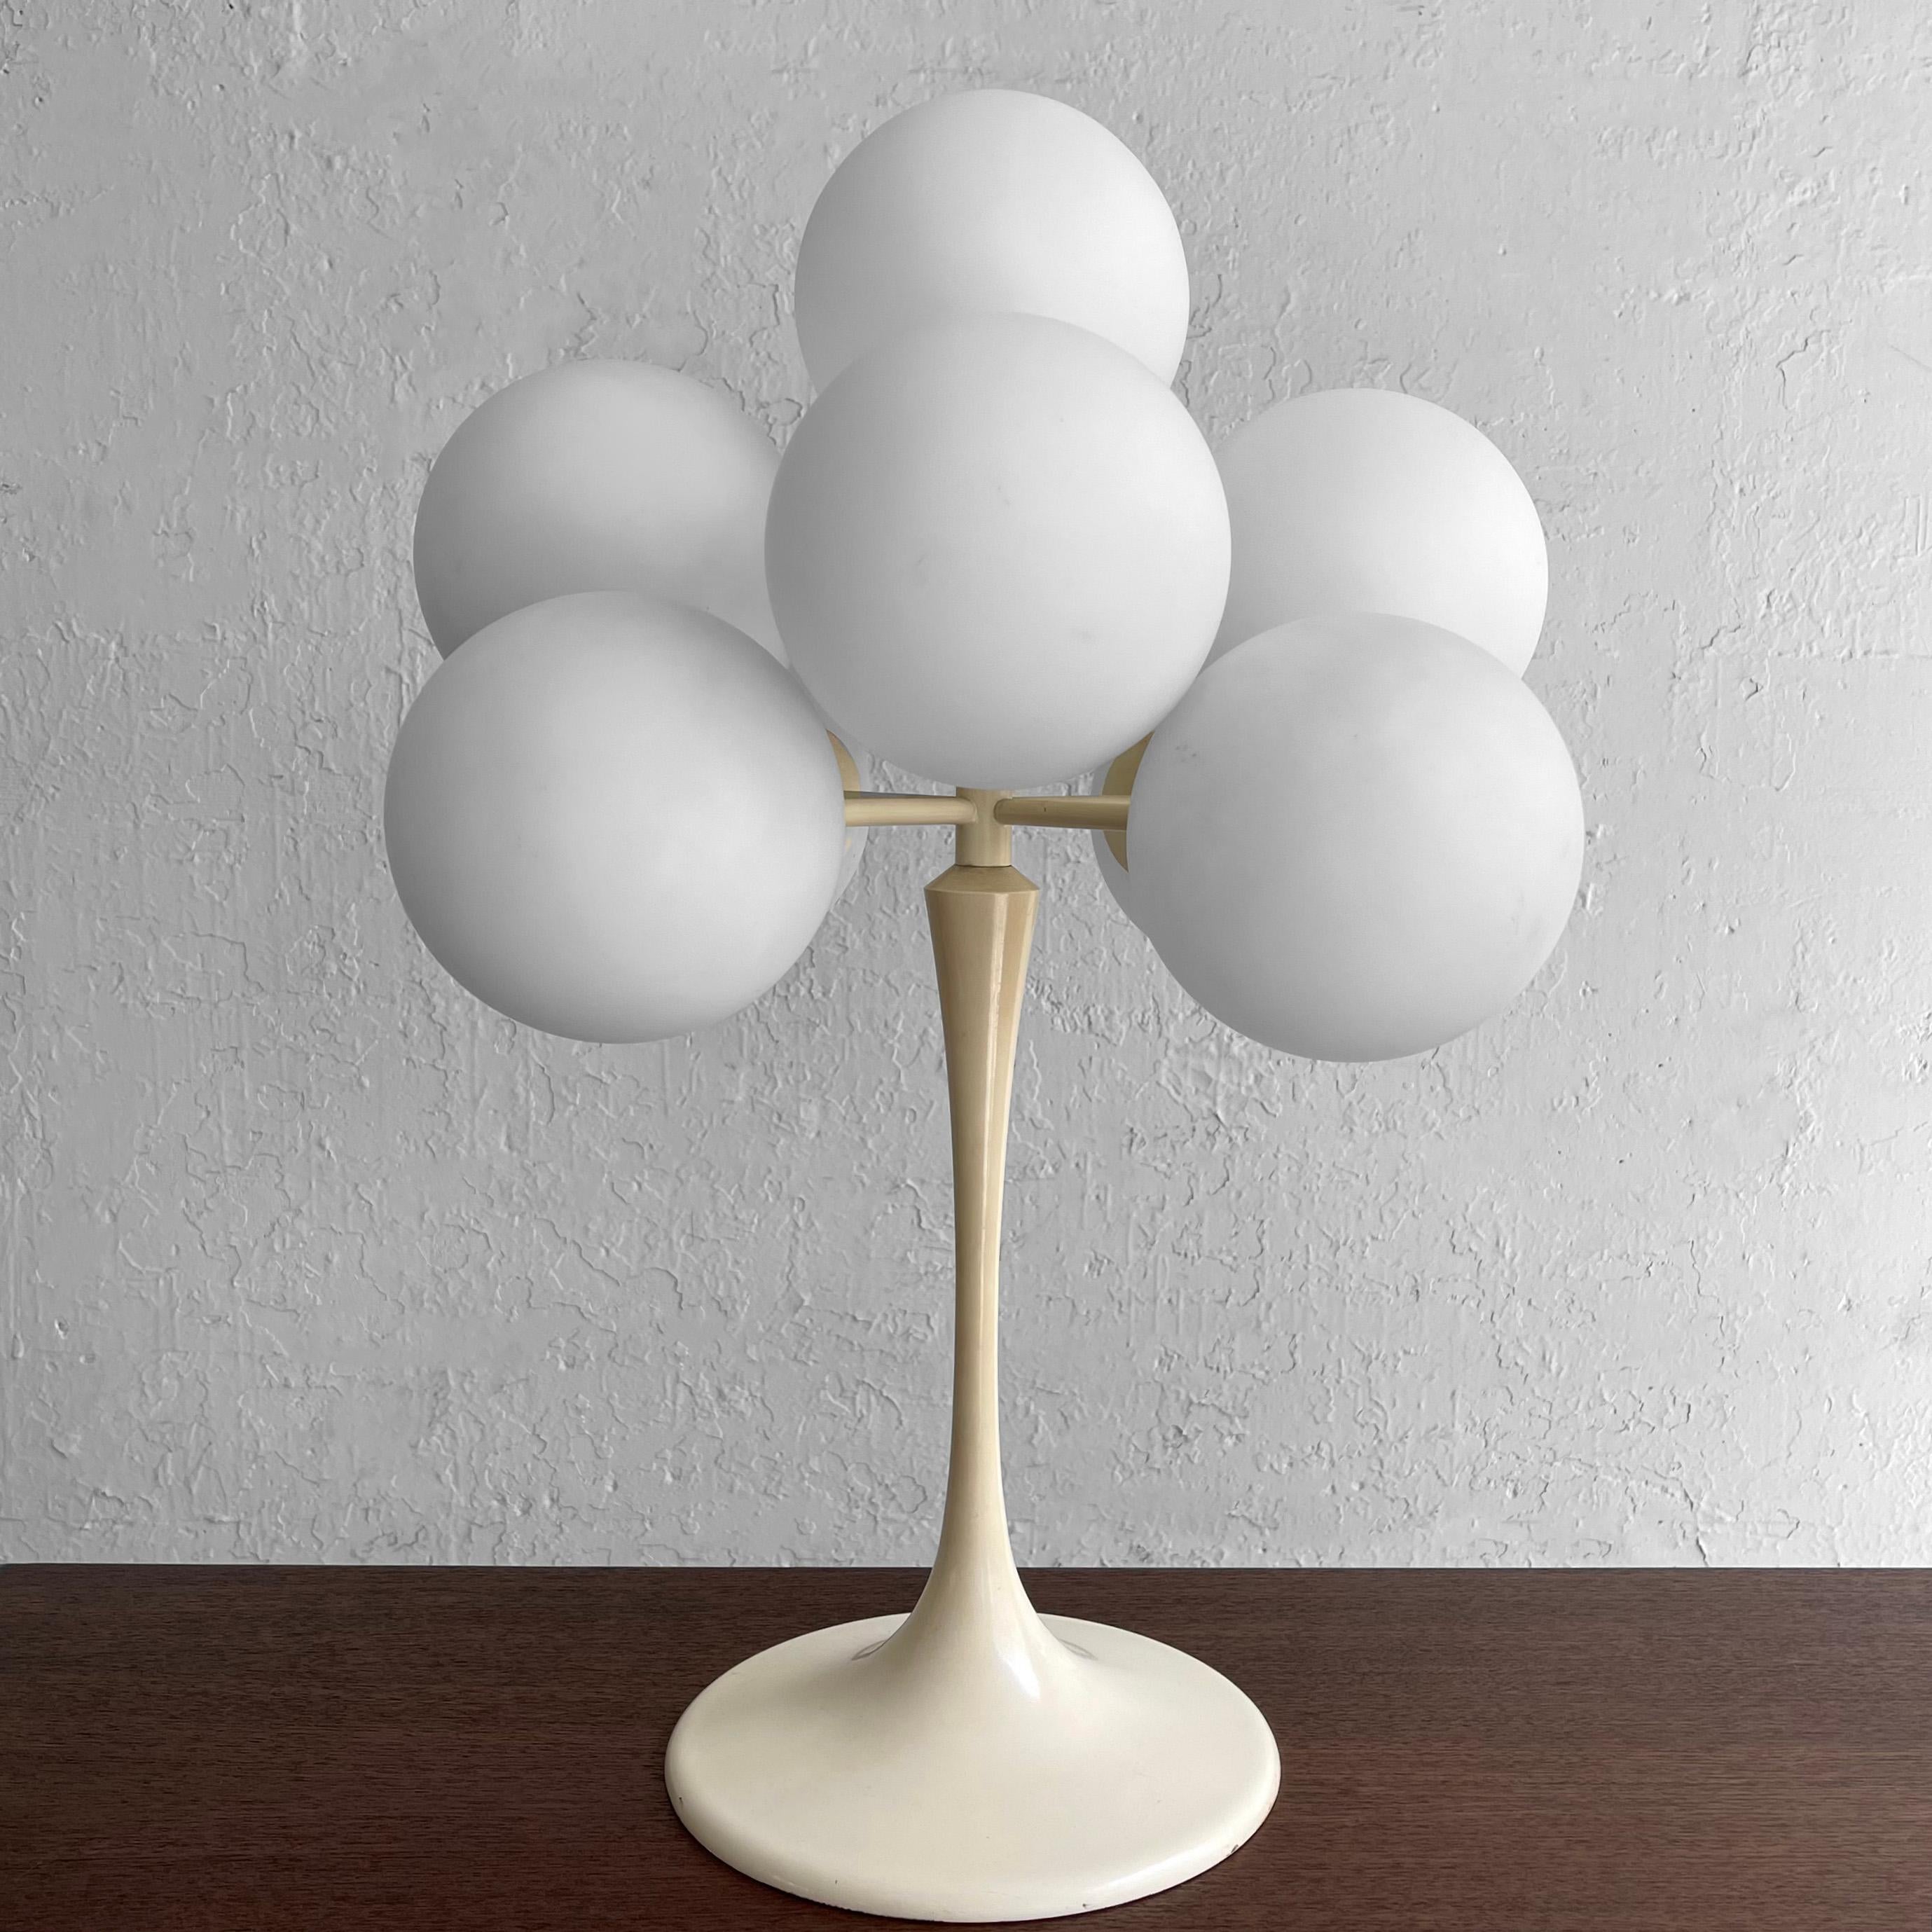 Scandinavian Modern Multi Globe Table Lamp By E.R. Nele For Temde Leuchten, Switzerland